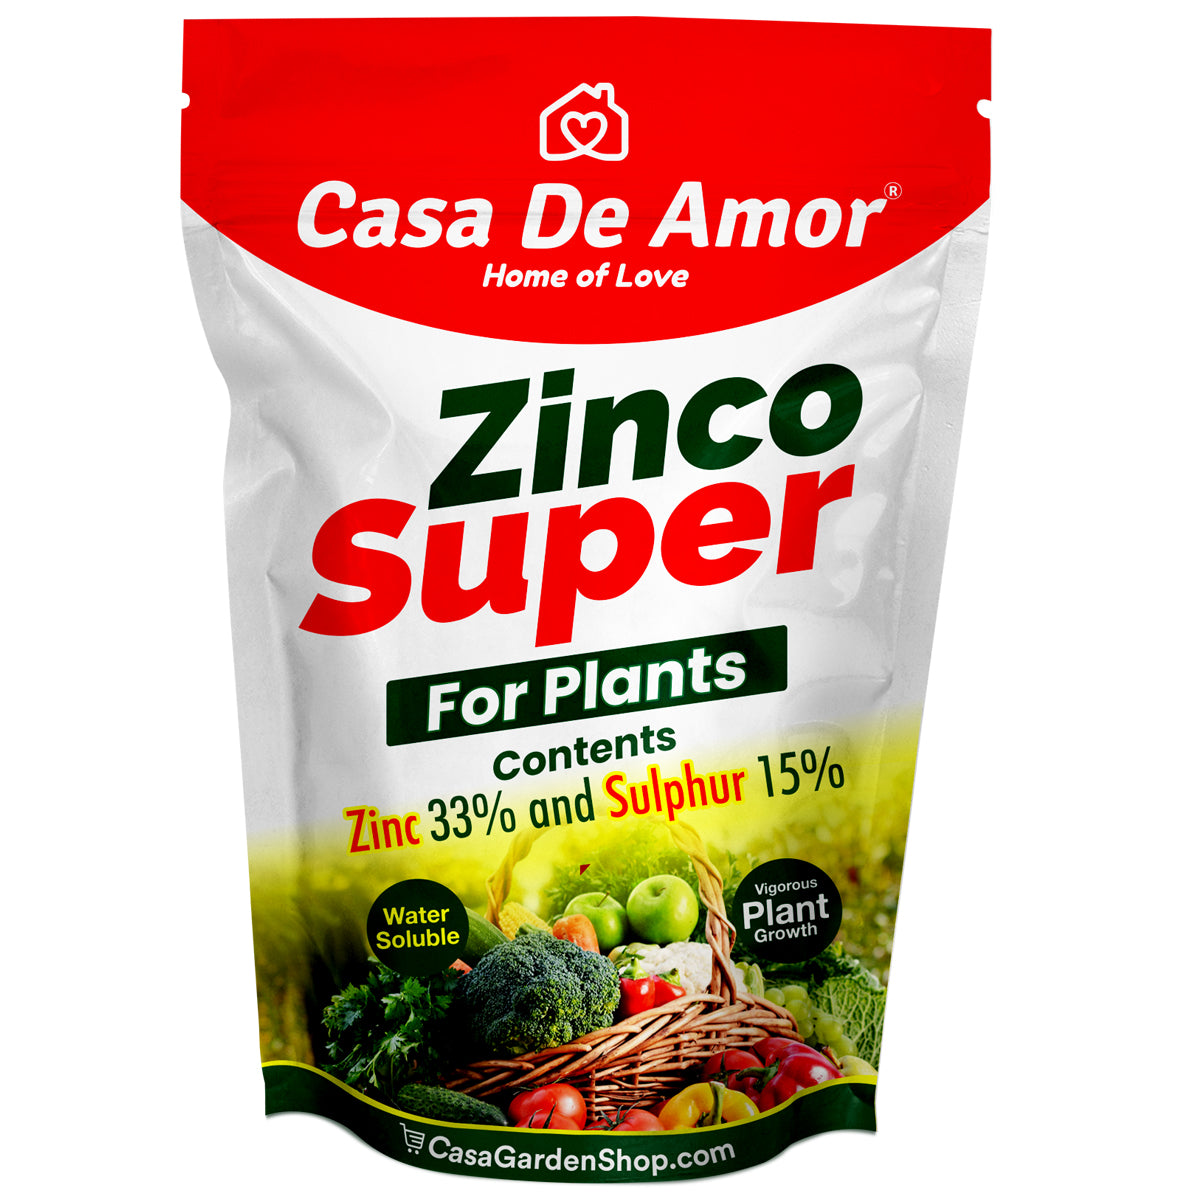 Casa De Amor Zinco Super (Zinc 33% and Sulphur 15%) Micronutrient Fertilizer for All Types of Plants, Lawn and Gardening